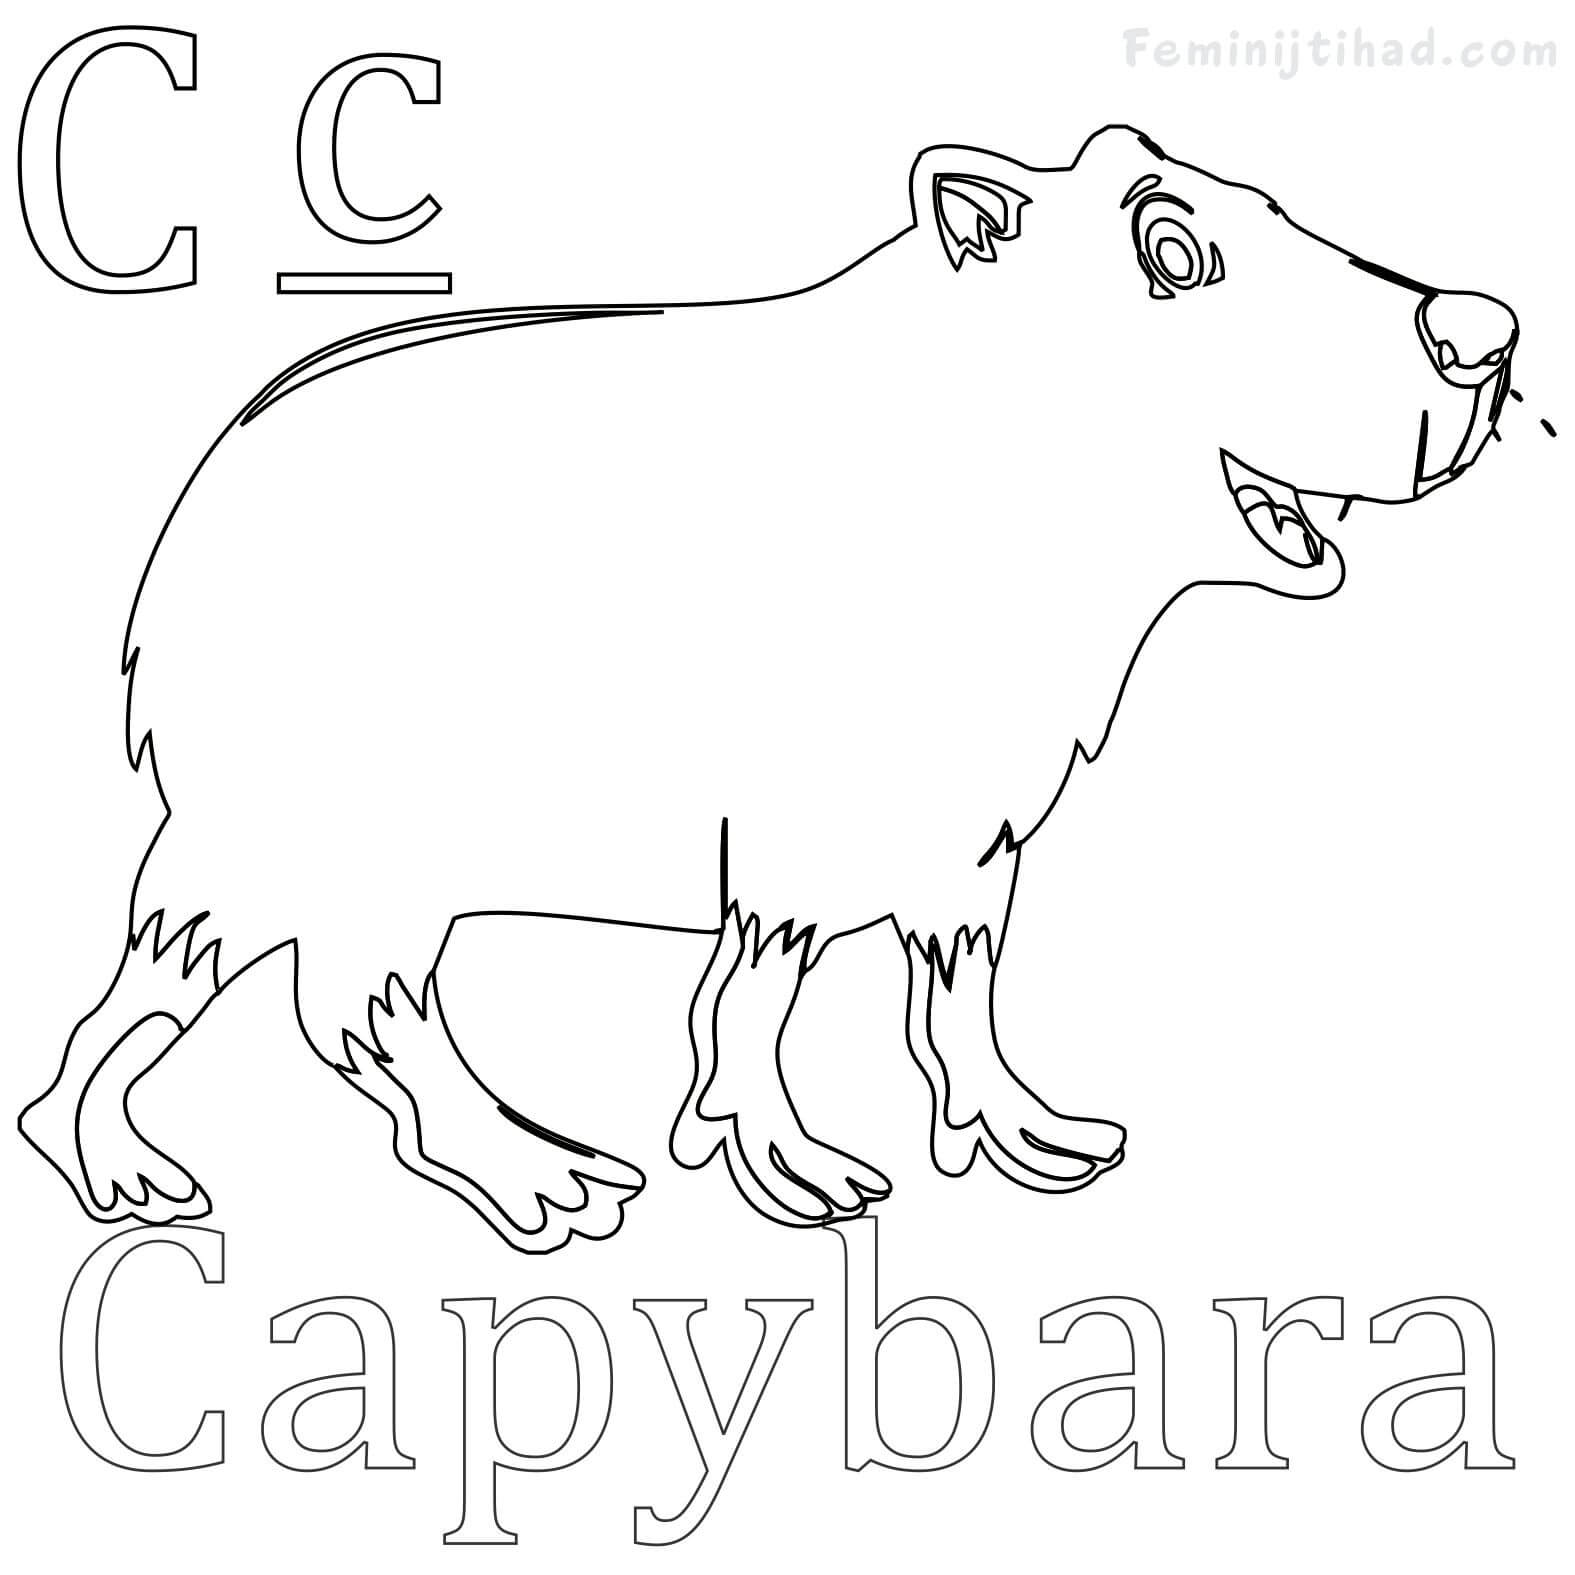 Capybara Coloring page Printable